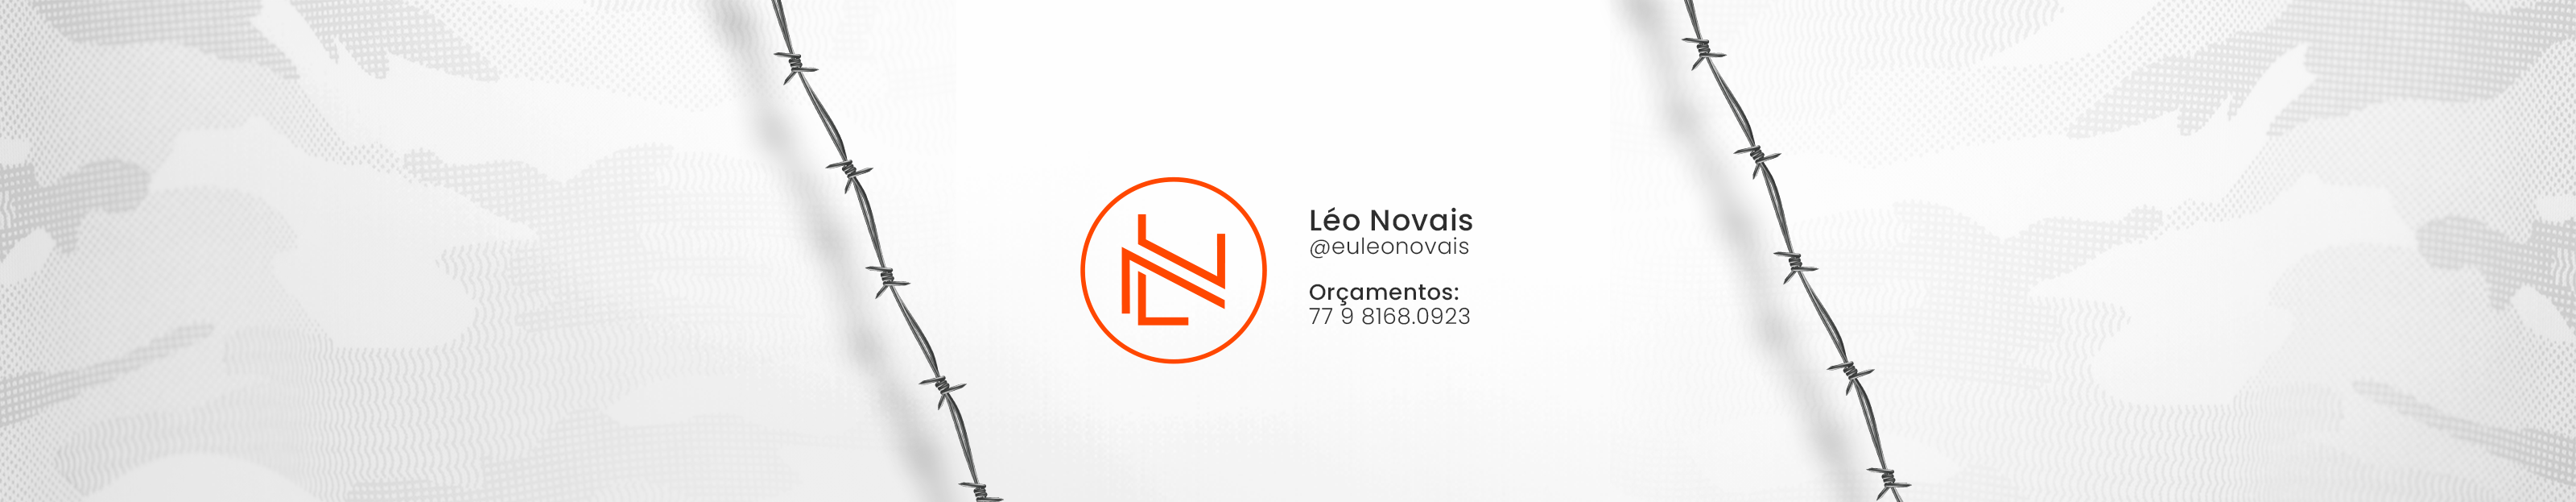 Leo Novais ✪'s profile banner